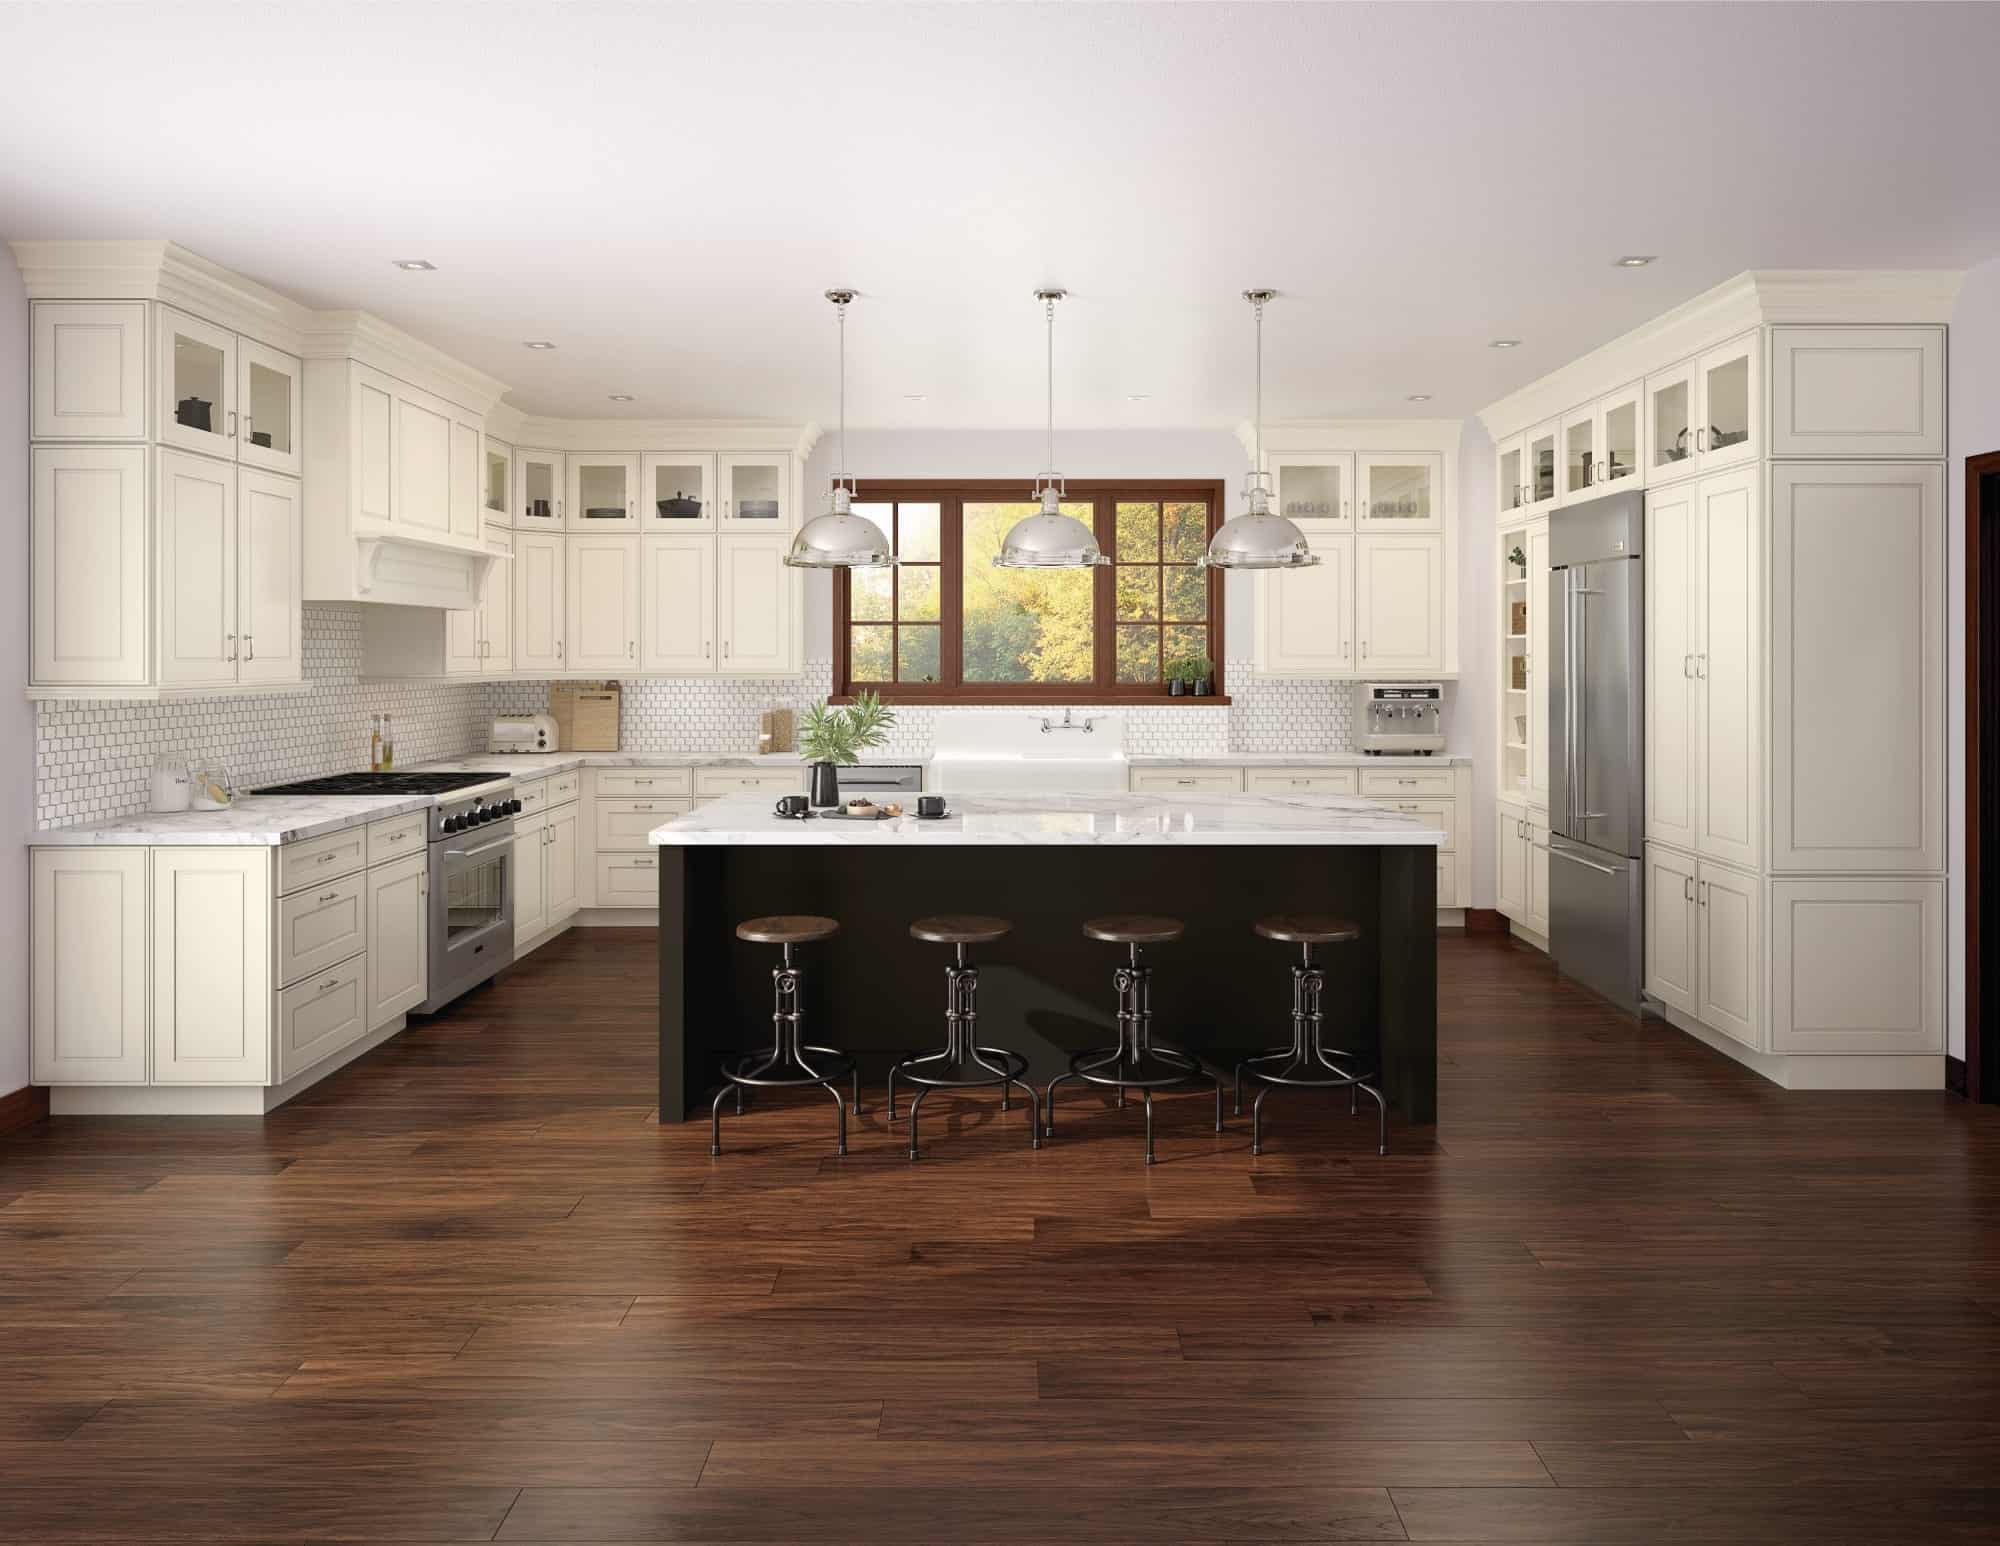 Creatice Kitchen Cabinets Houston for Simple Design